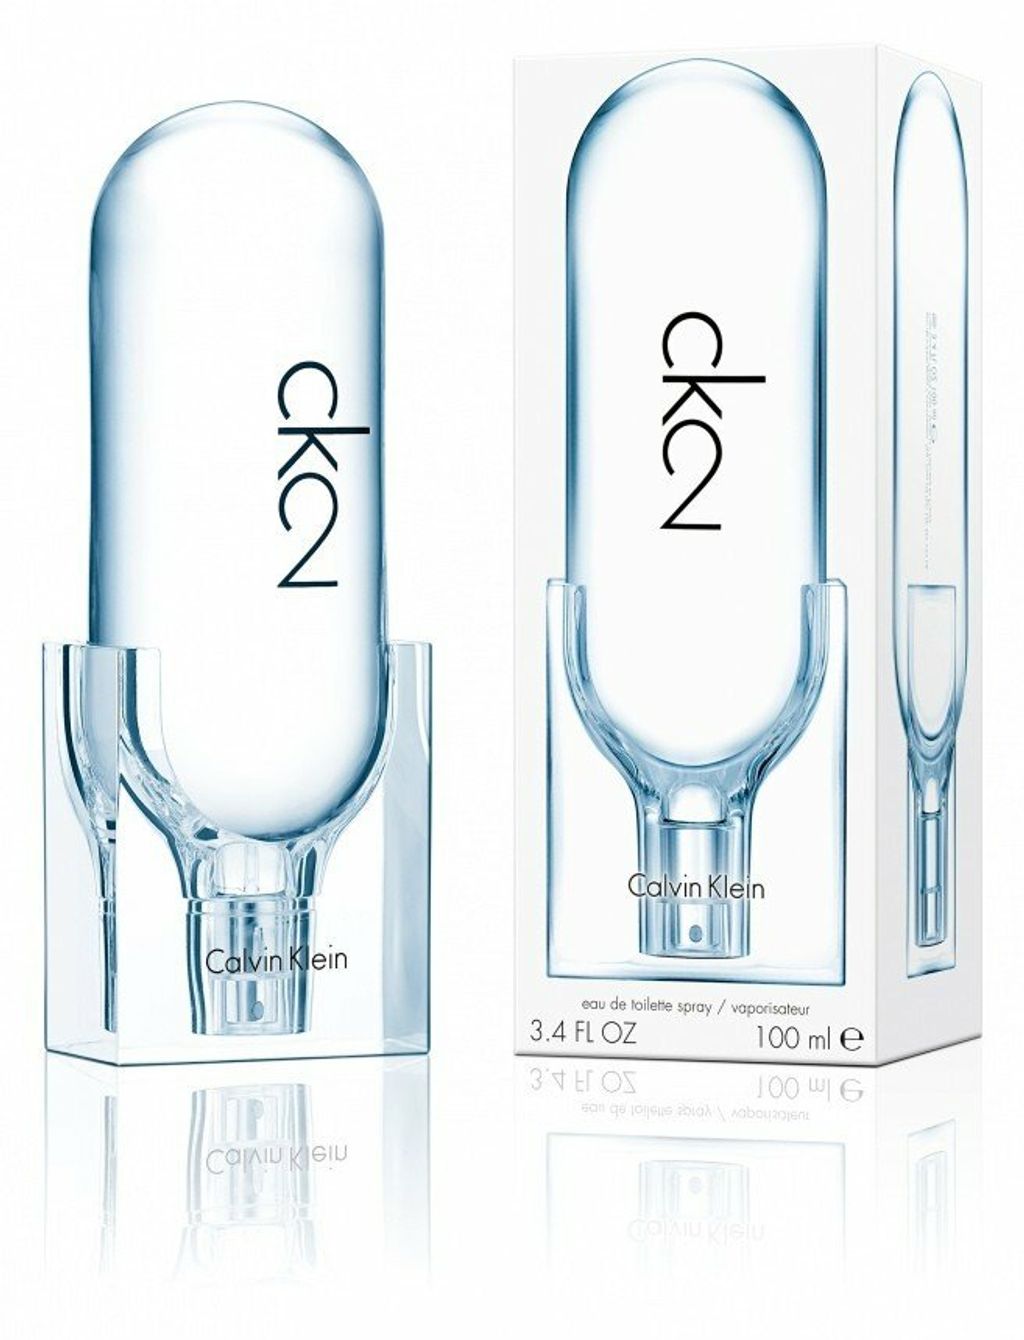 CK2 CALVIN KLEIN FOR WOMEN AND MEN EDT 100ML [Authentic] –  LuxuryfragranceStore.com